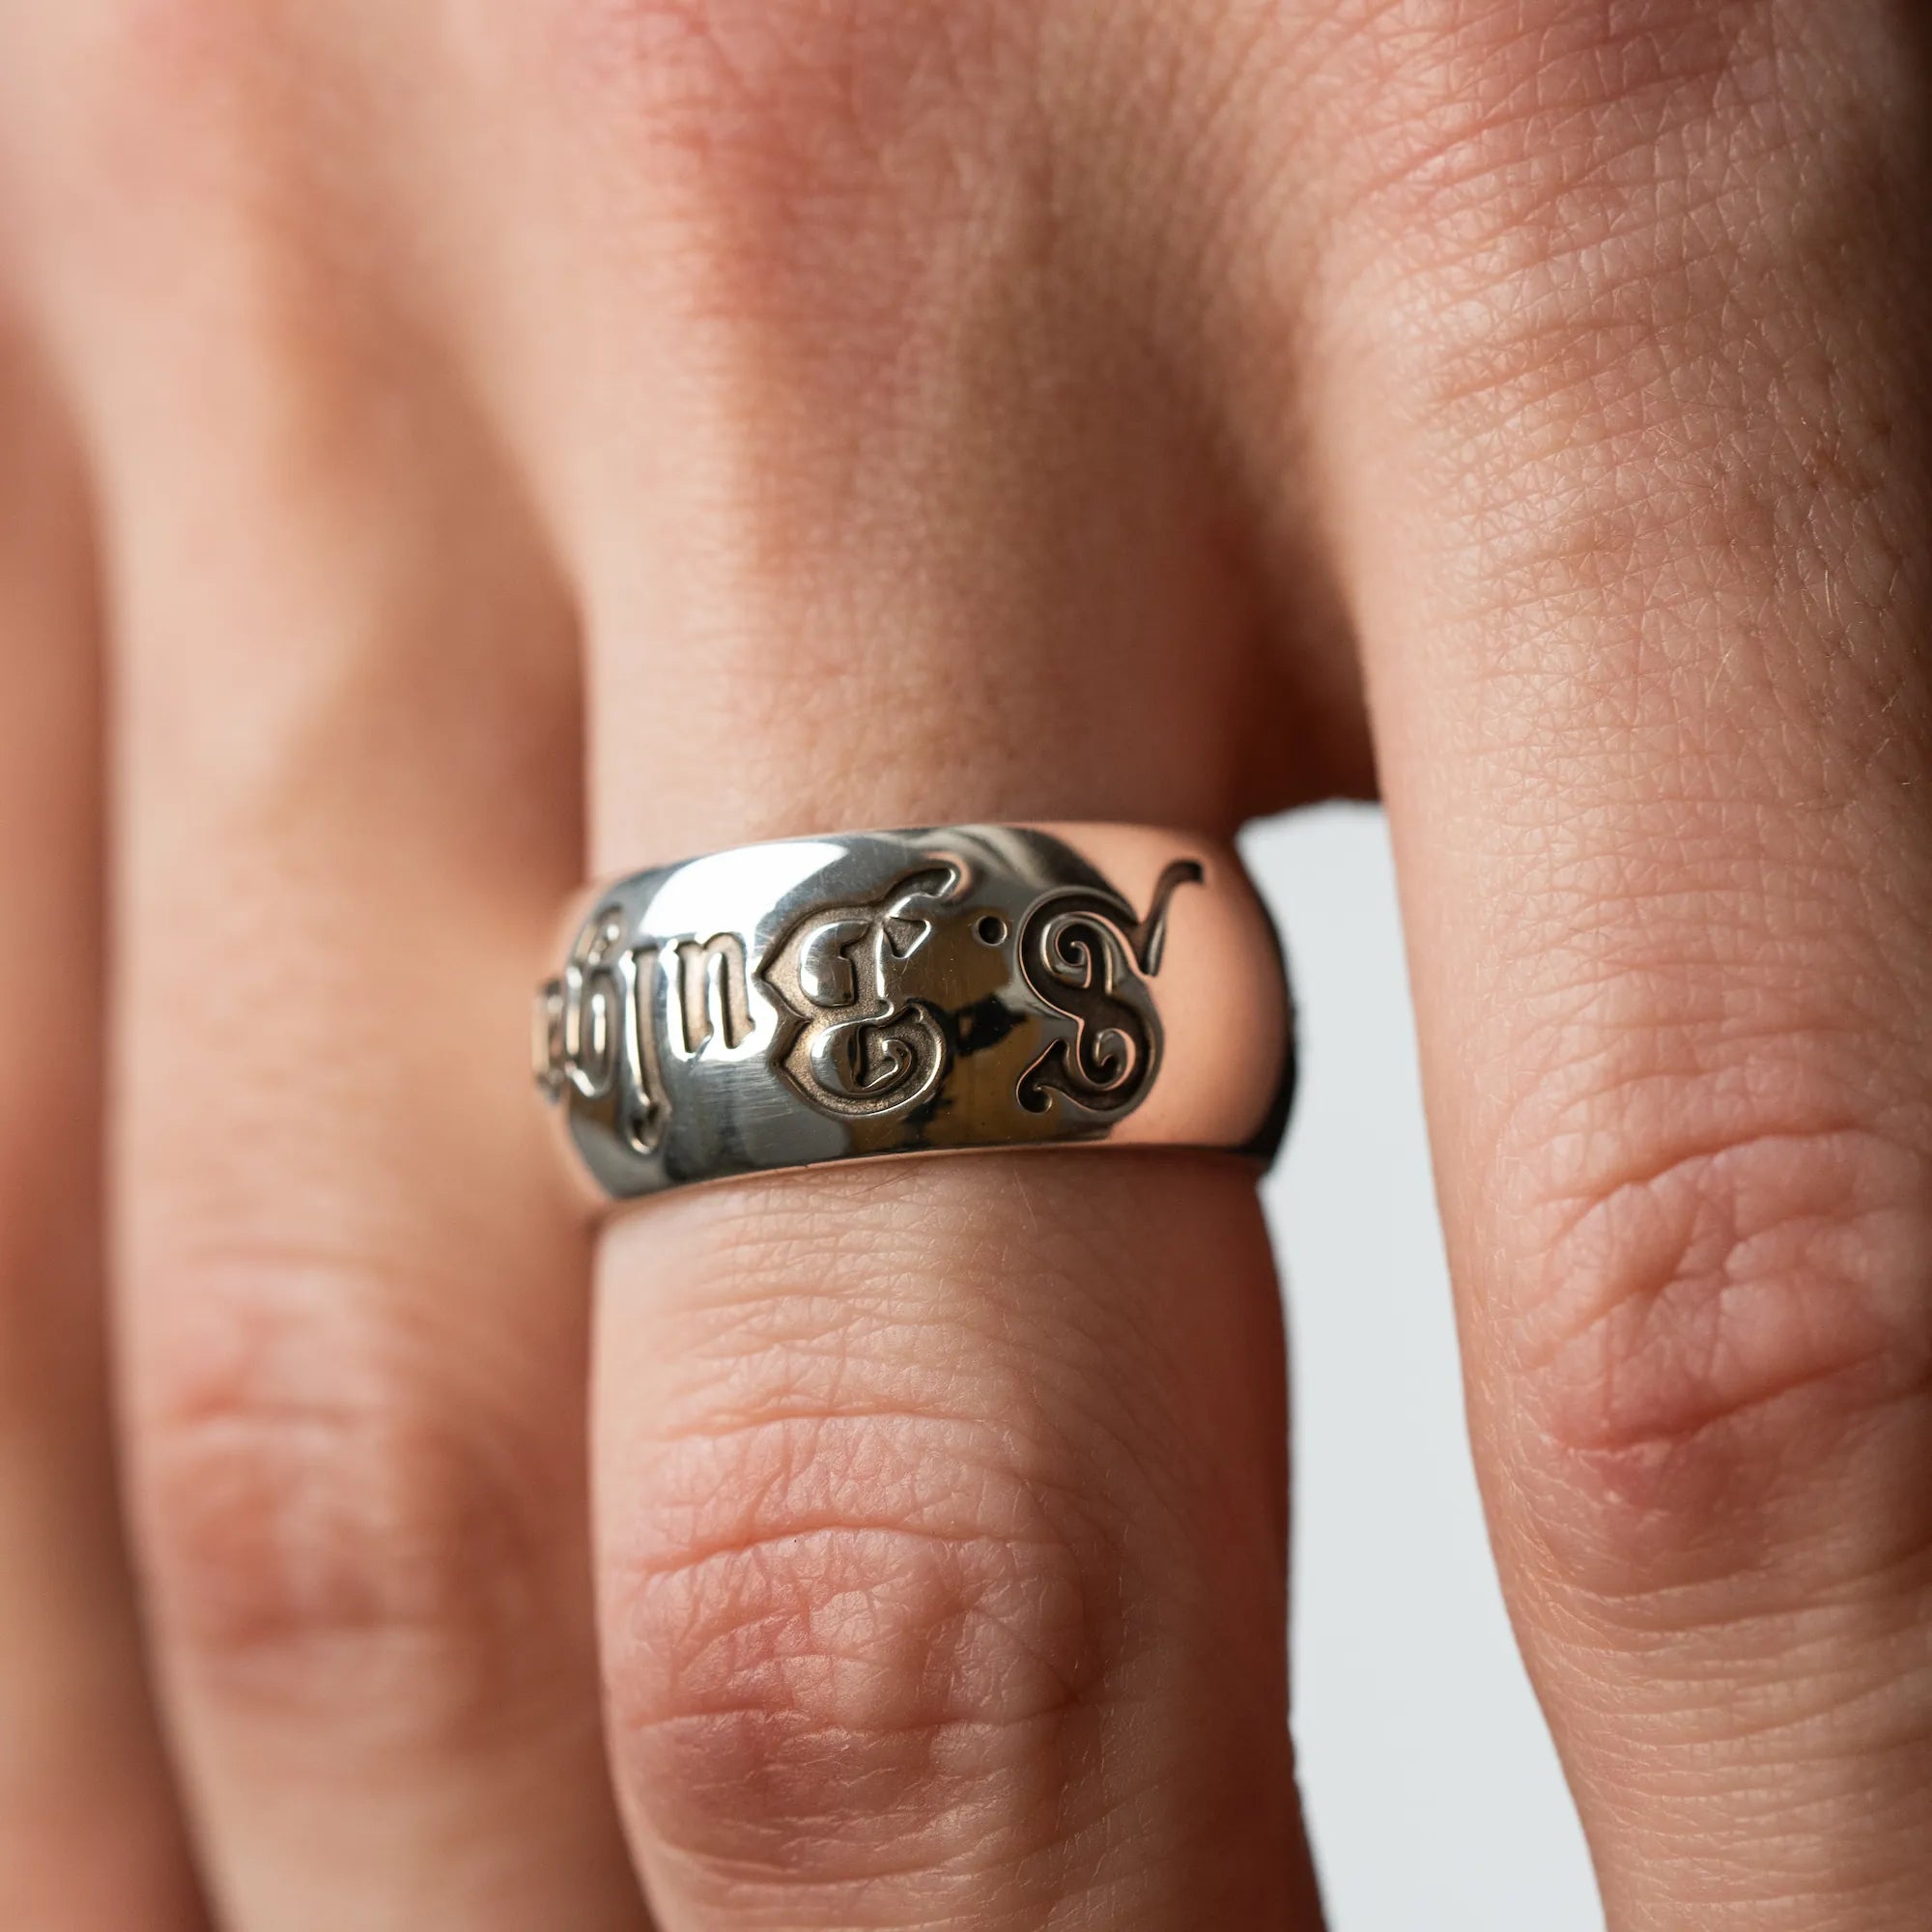 Mann trägt Bulgari Ring "Save The Children" in Silber an seinem Ringfinger